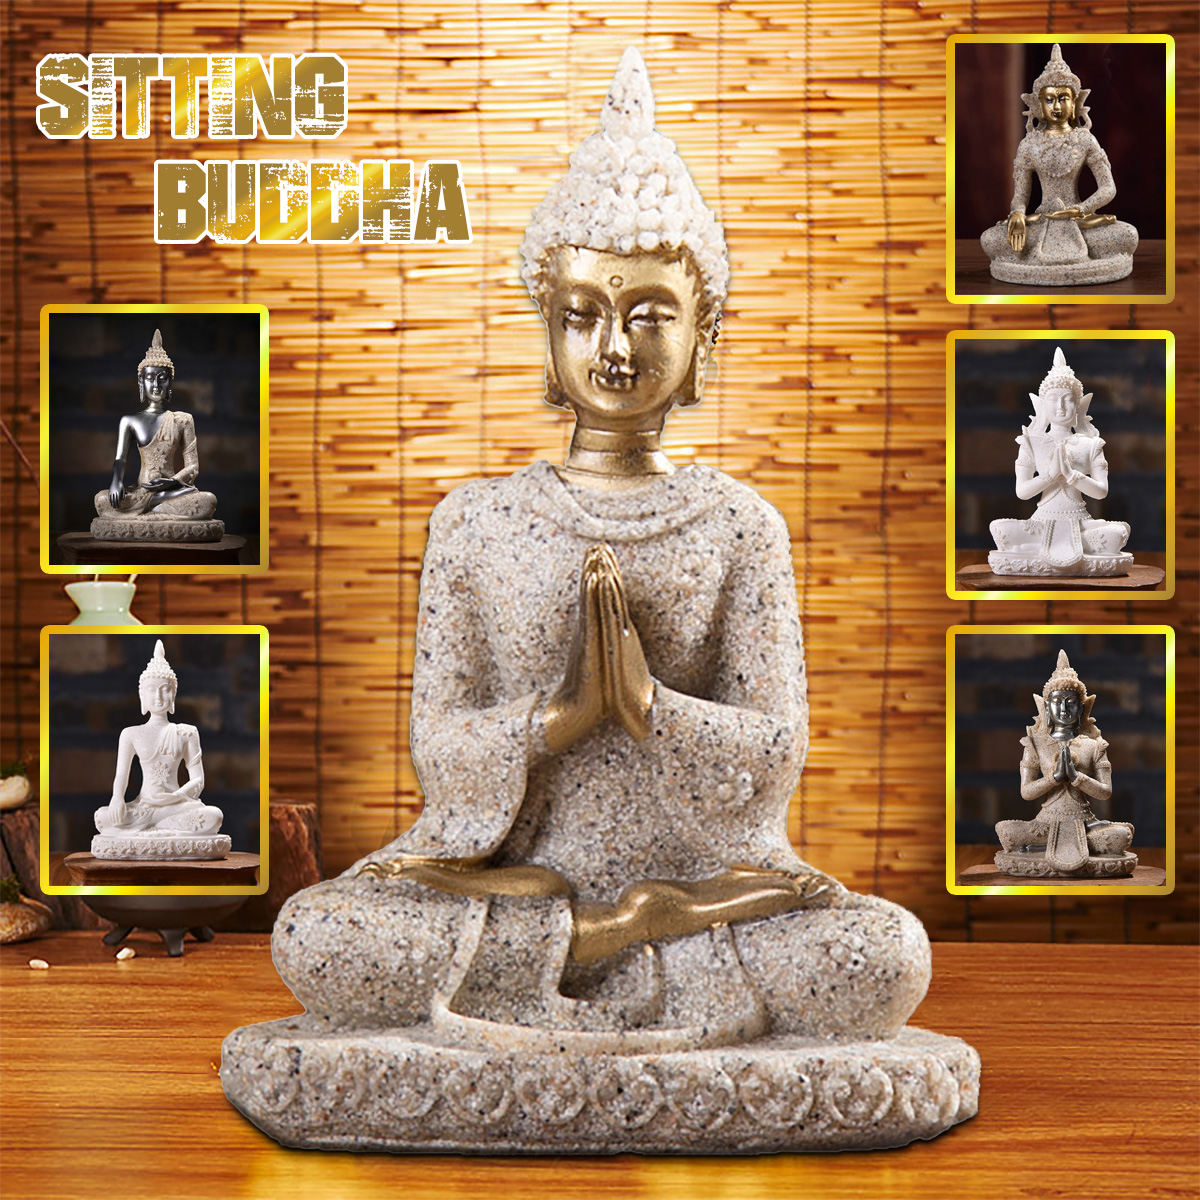 Sitting-Thai-Statue-Sculpture-Outdoor-Indoor-Statue-Ornament-Home-Decorations-1582215-1